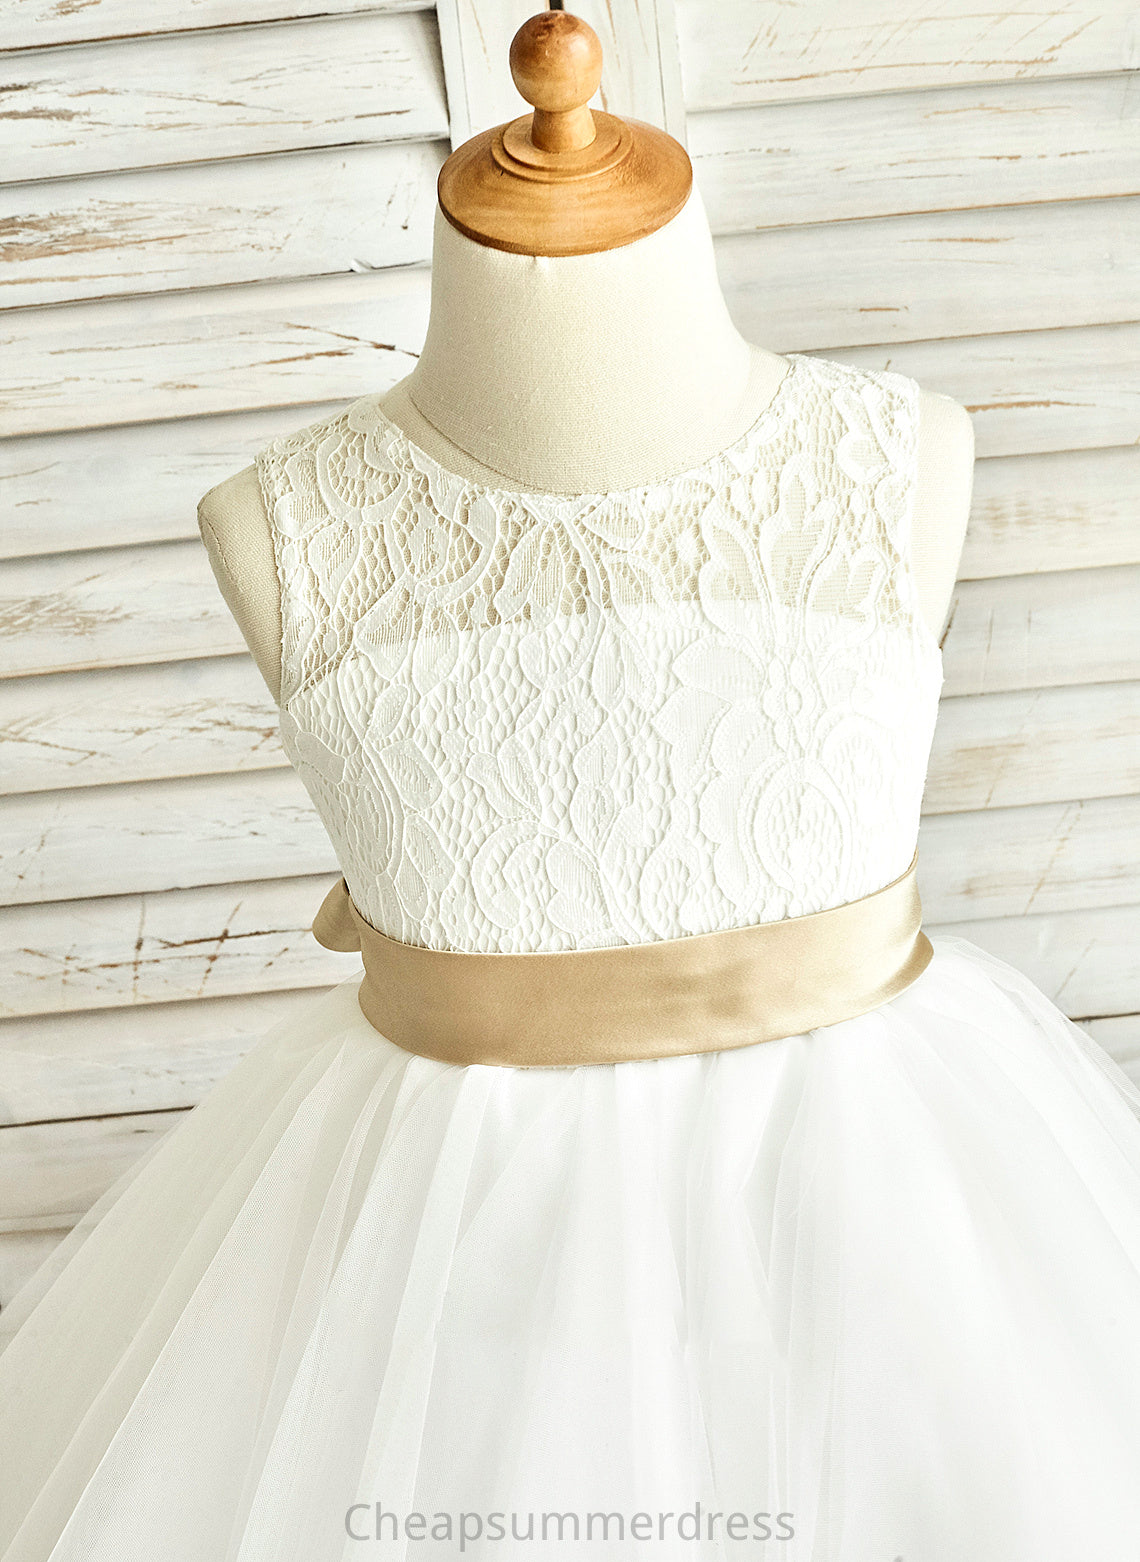 Tulle A-Line With Junior Bridesmaid Dresses Scoop Neck Brooke Sash Tea-Length